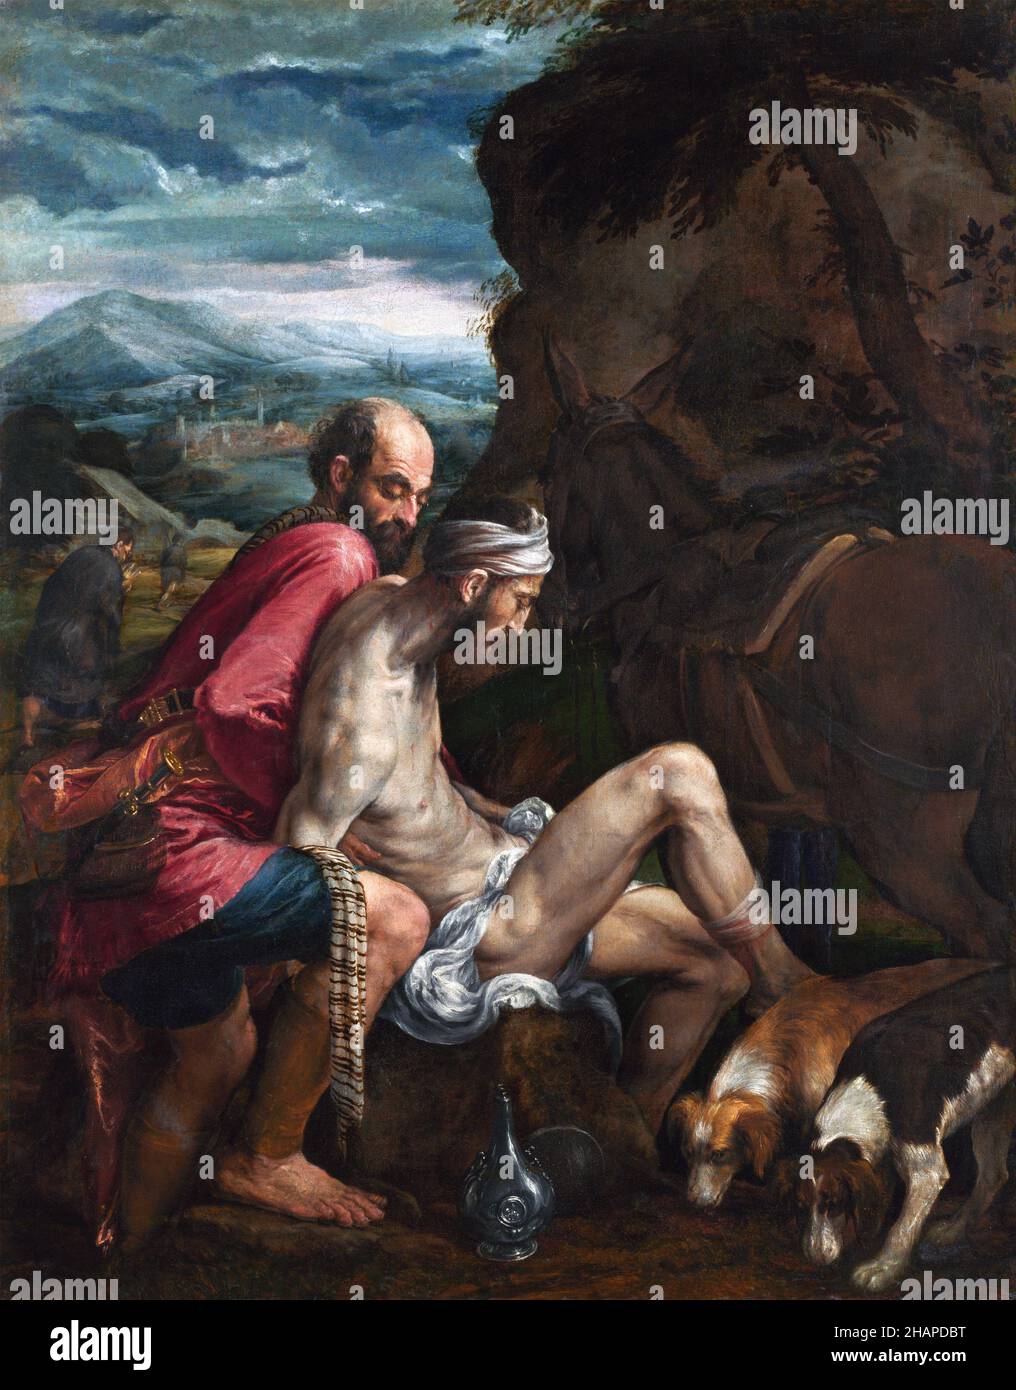 El Buen Samaritano de Jacopo Bassano (1510-1592), óleo sobre lienzo, c. 1562/3 Foto de stock